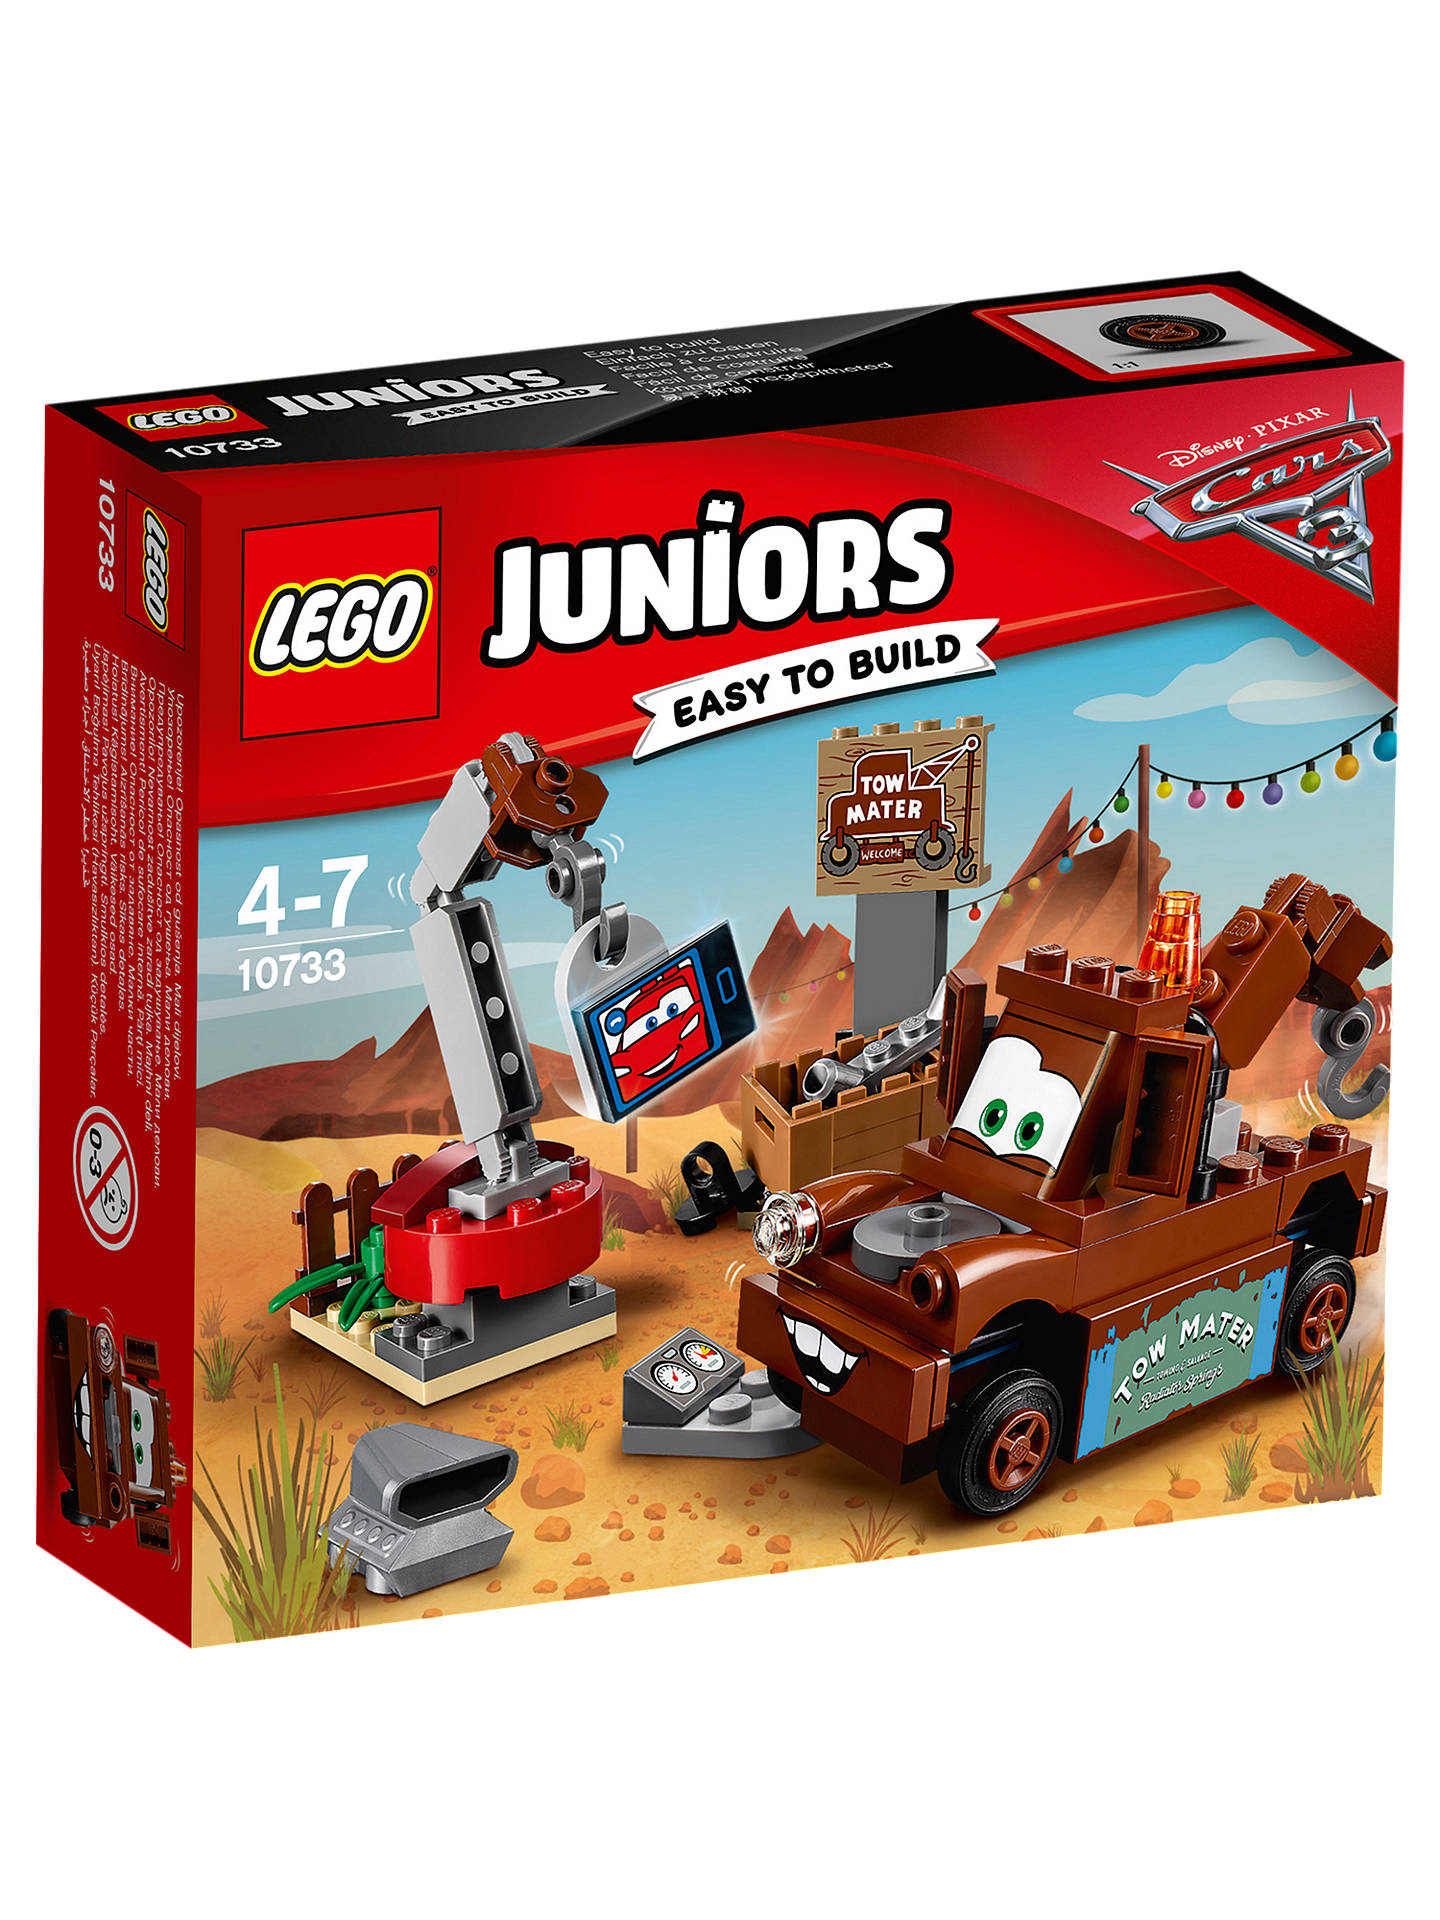 LEGO Juniors 10733 Disney Pixar Cars 3 Mater's Junkyard at